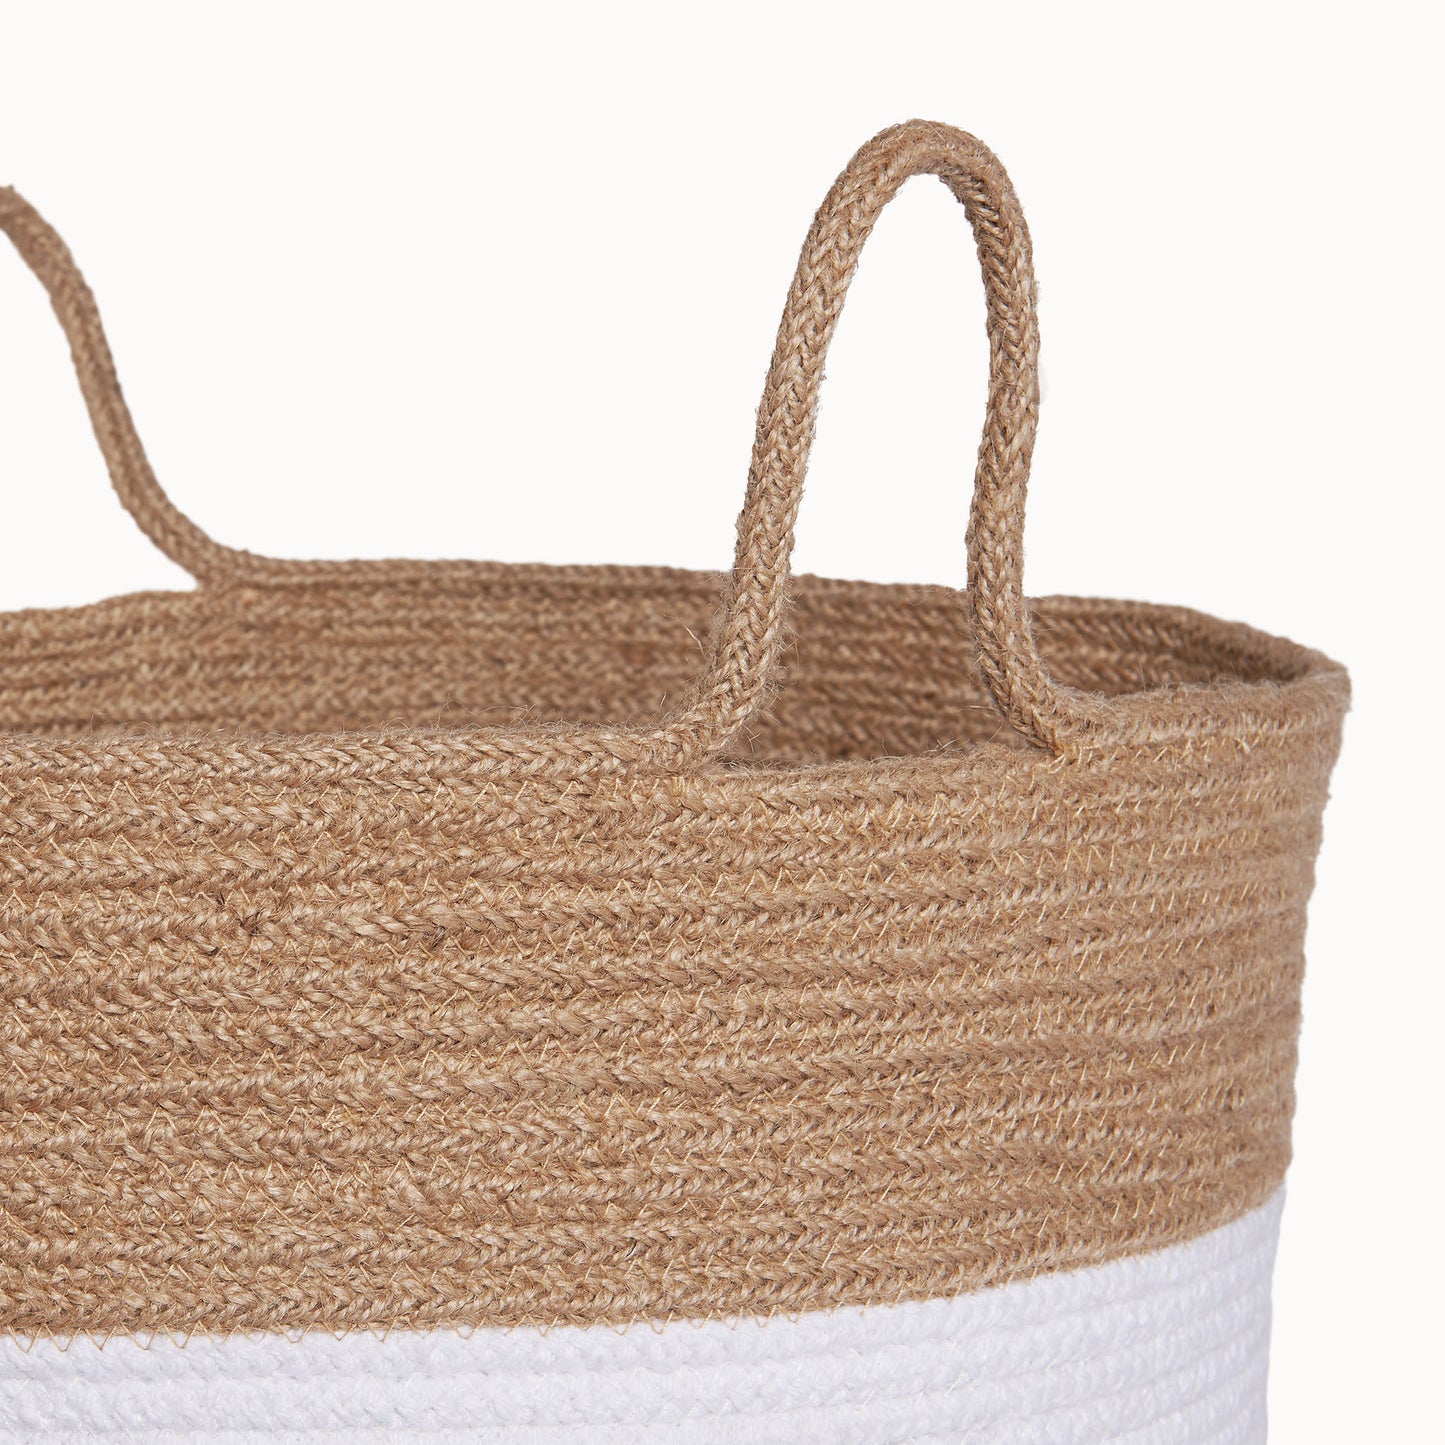 Cotton basket